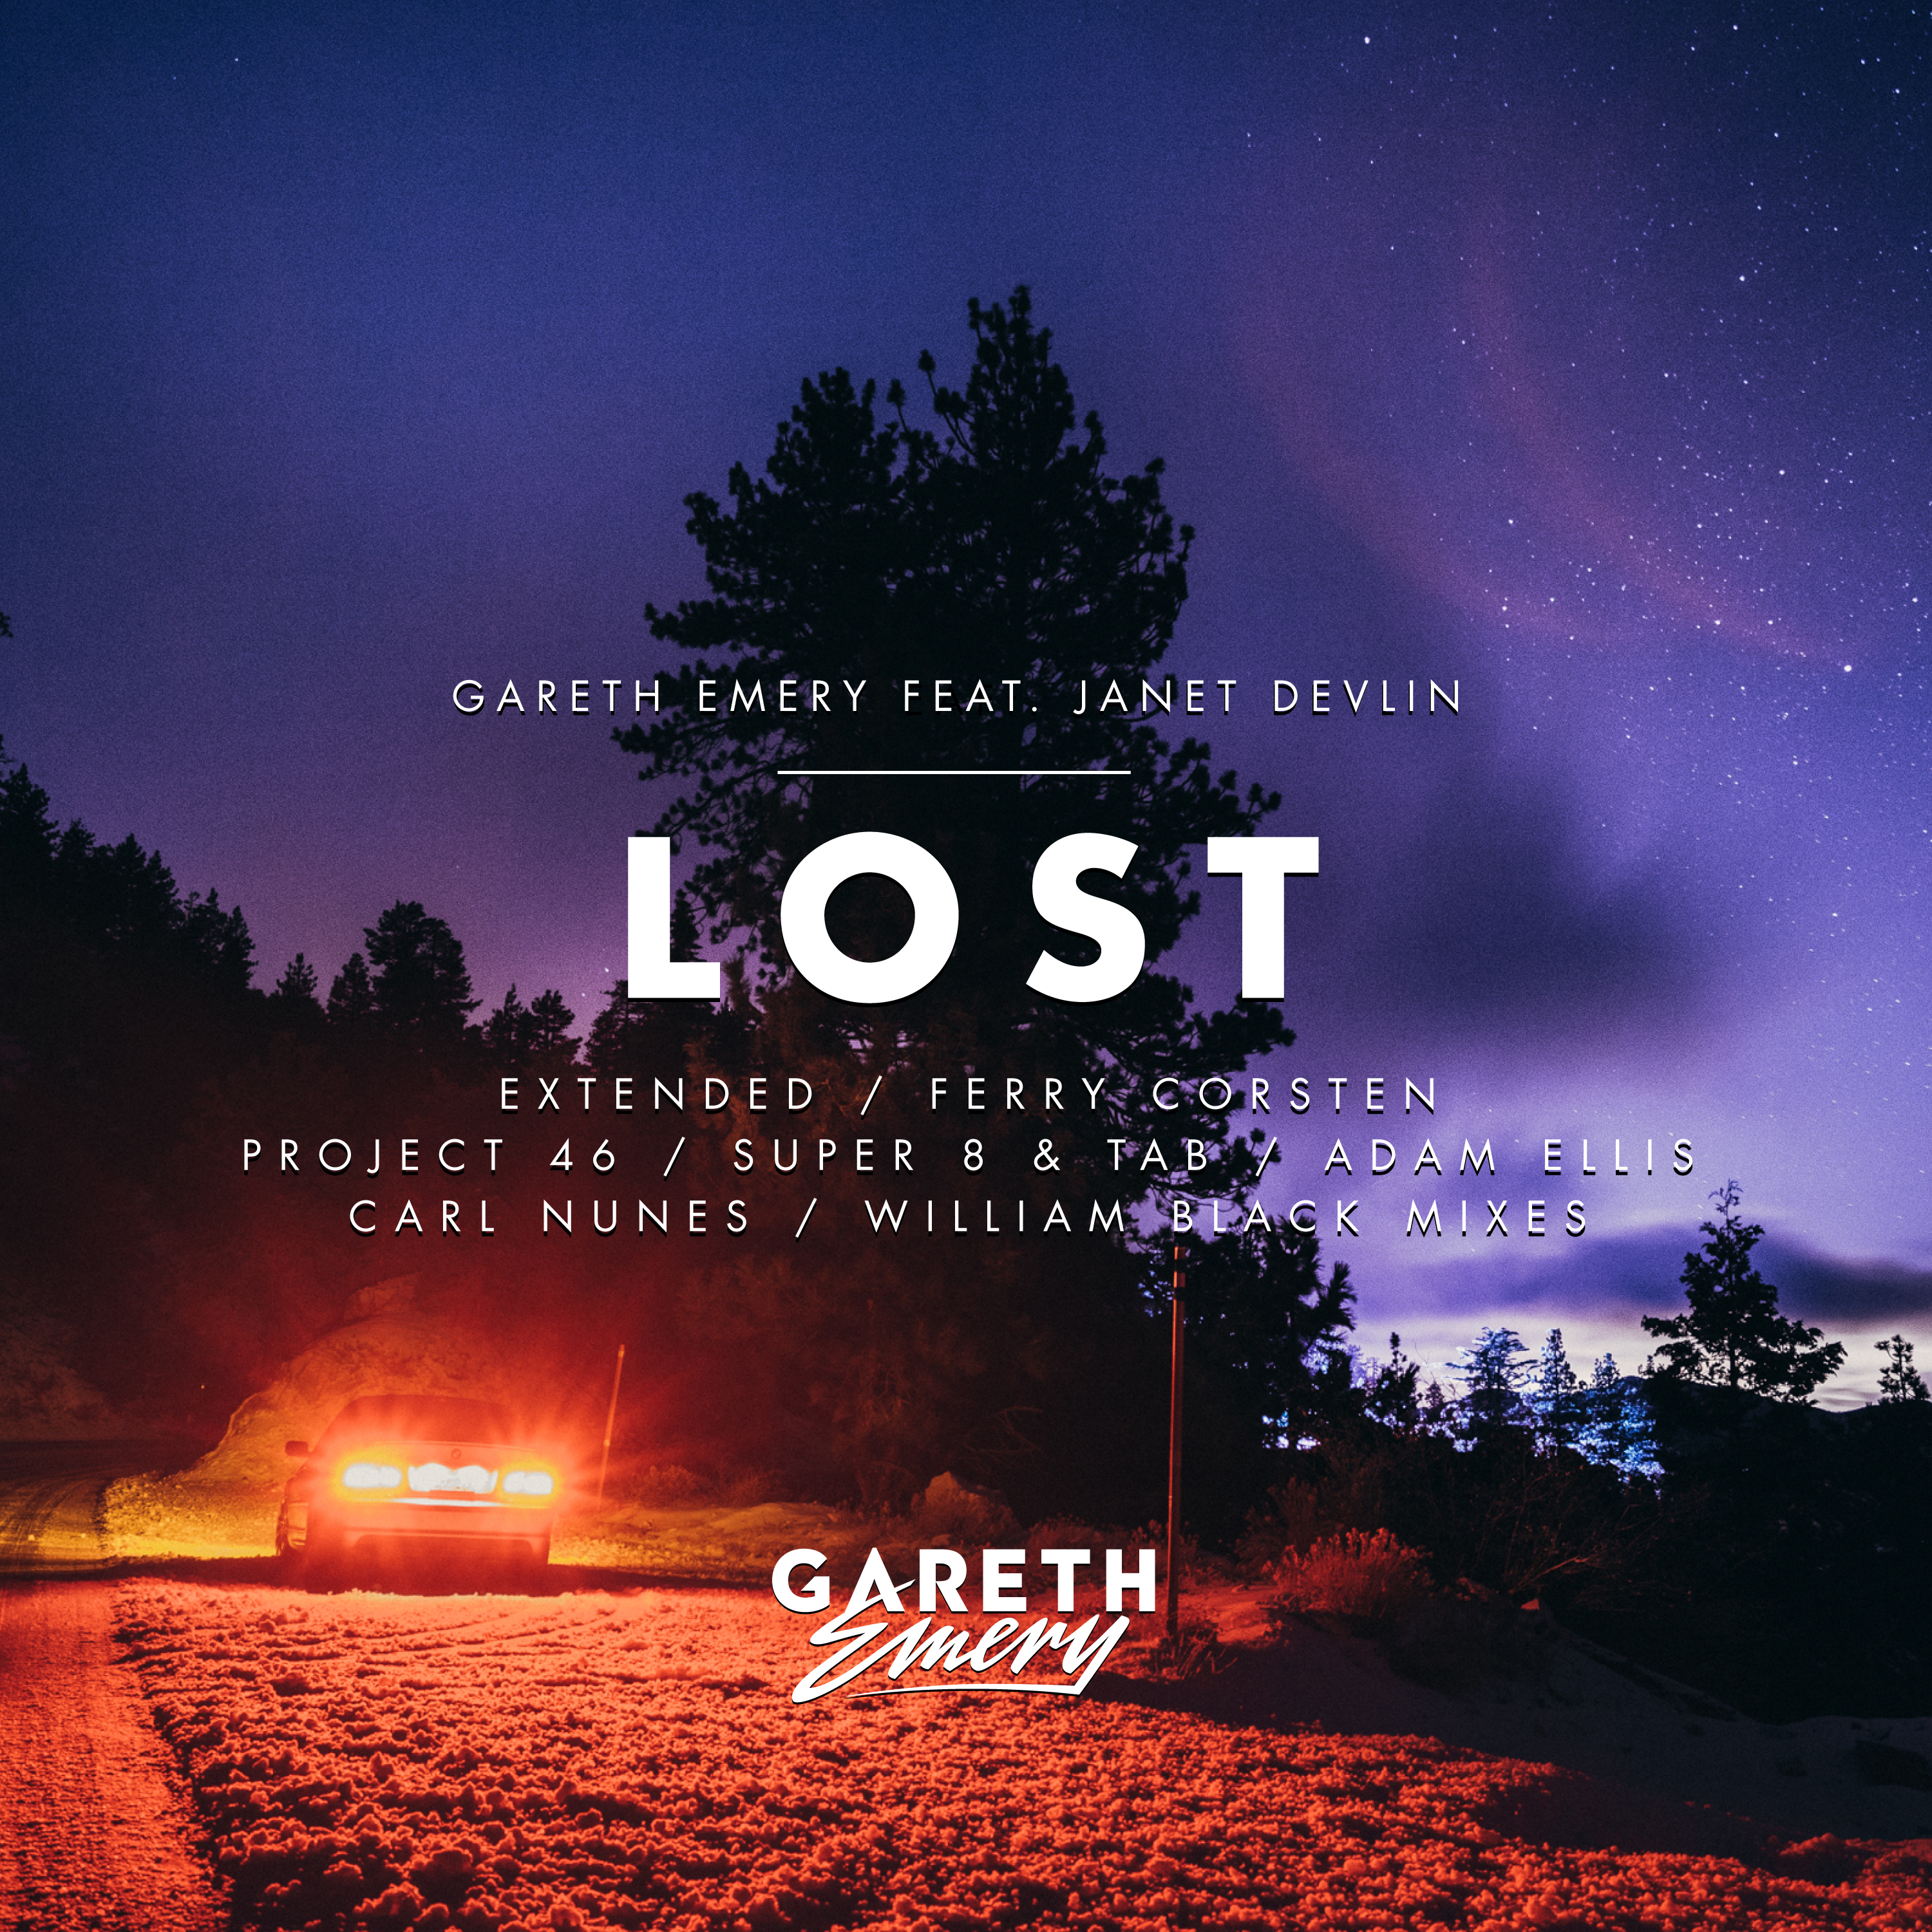 Gareth Emery featuring Janet Devlin — Lost cover artwork